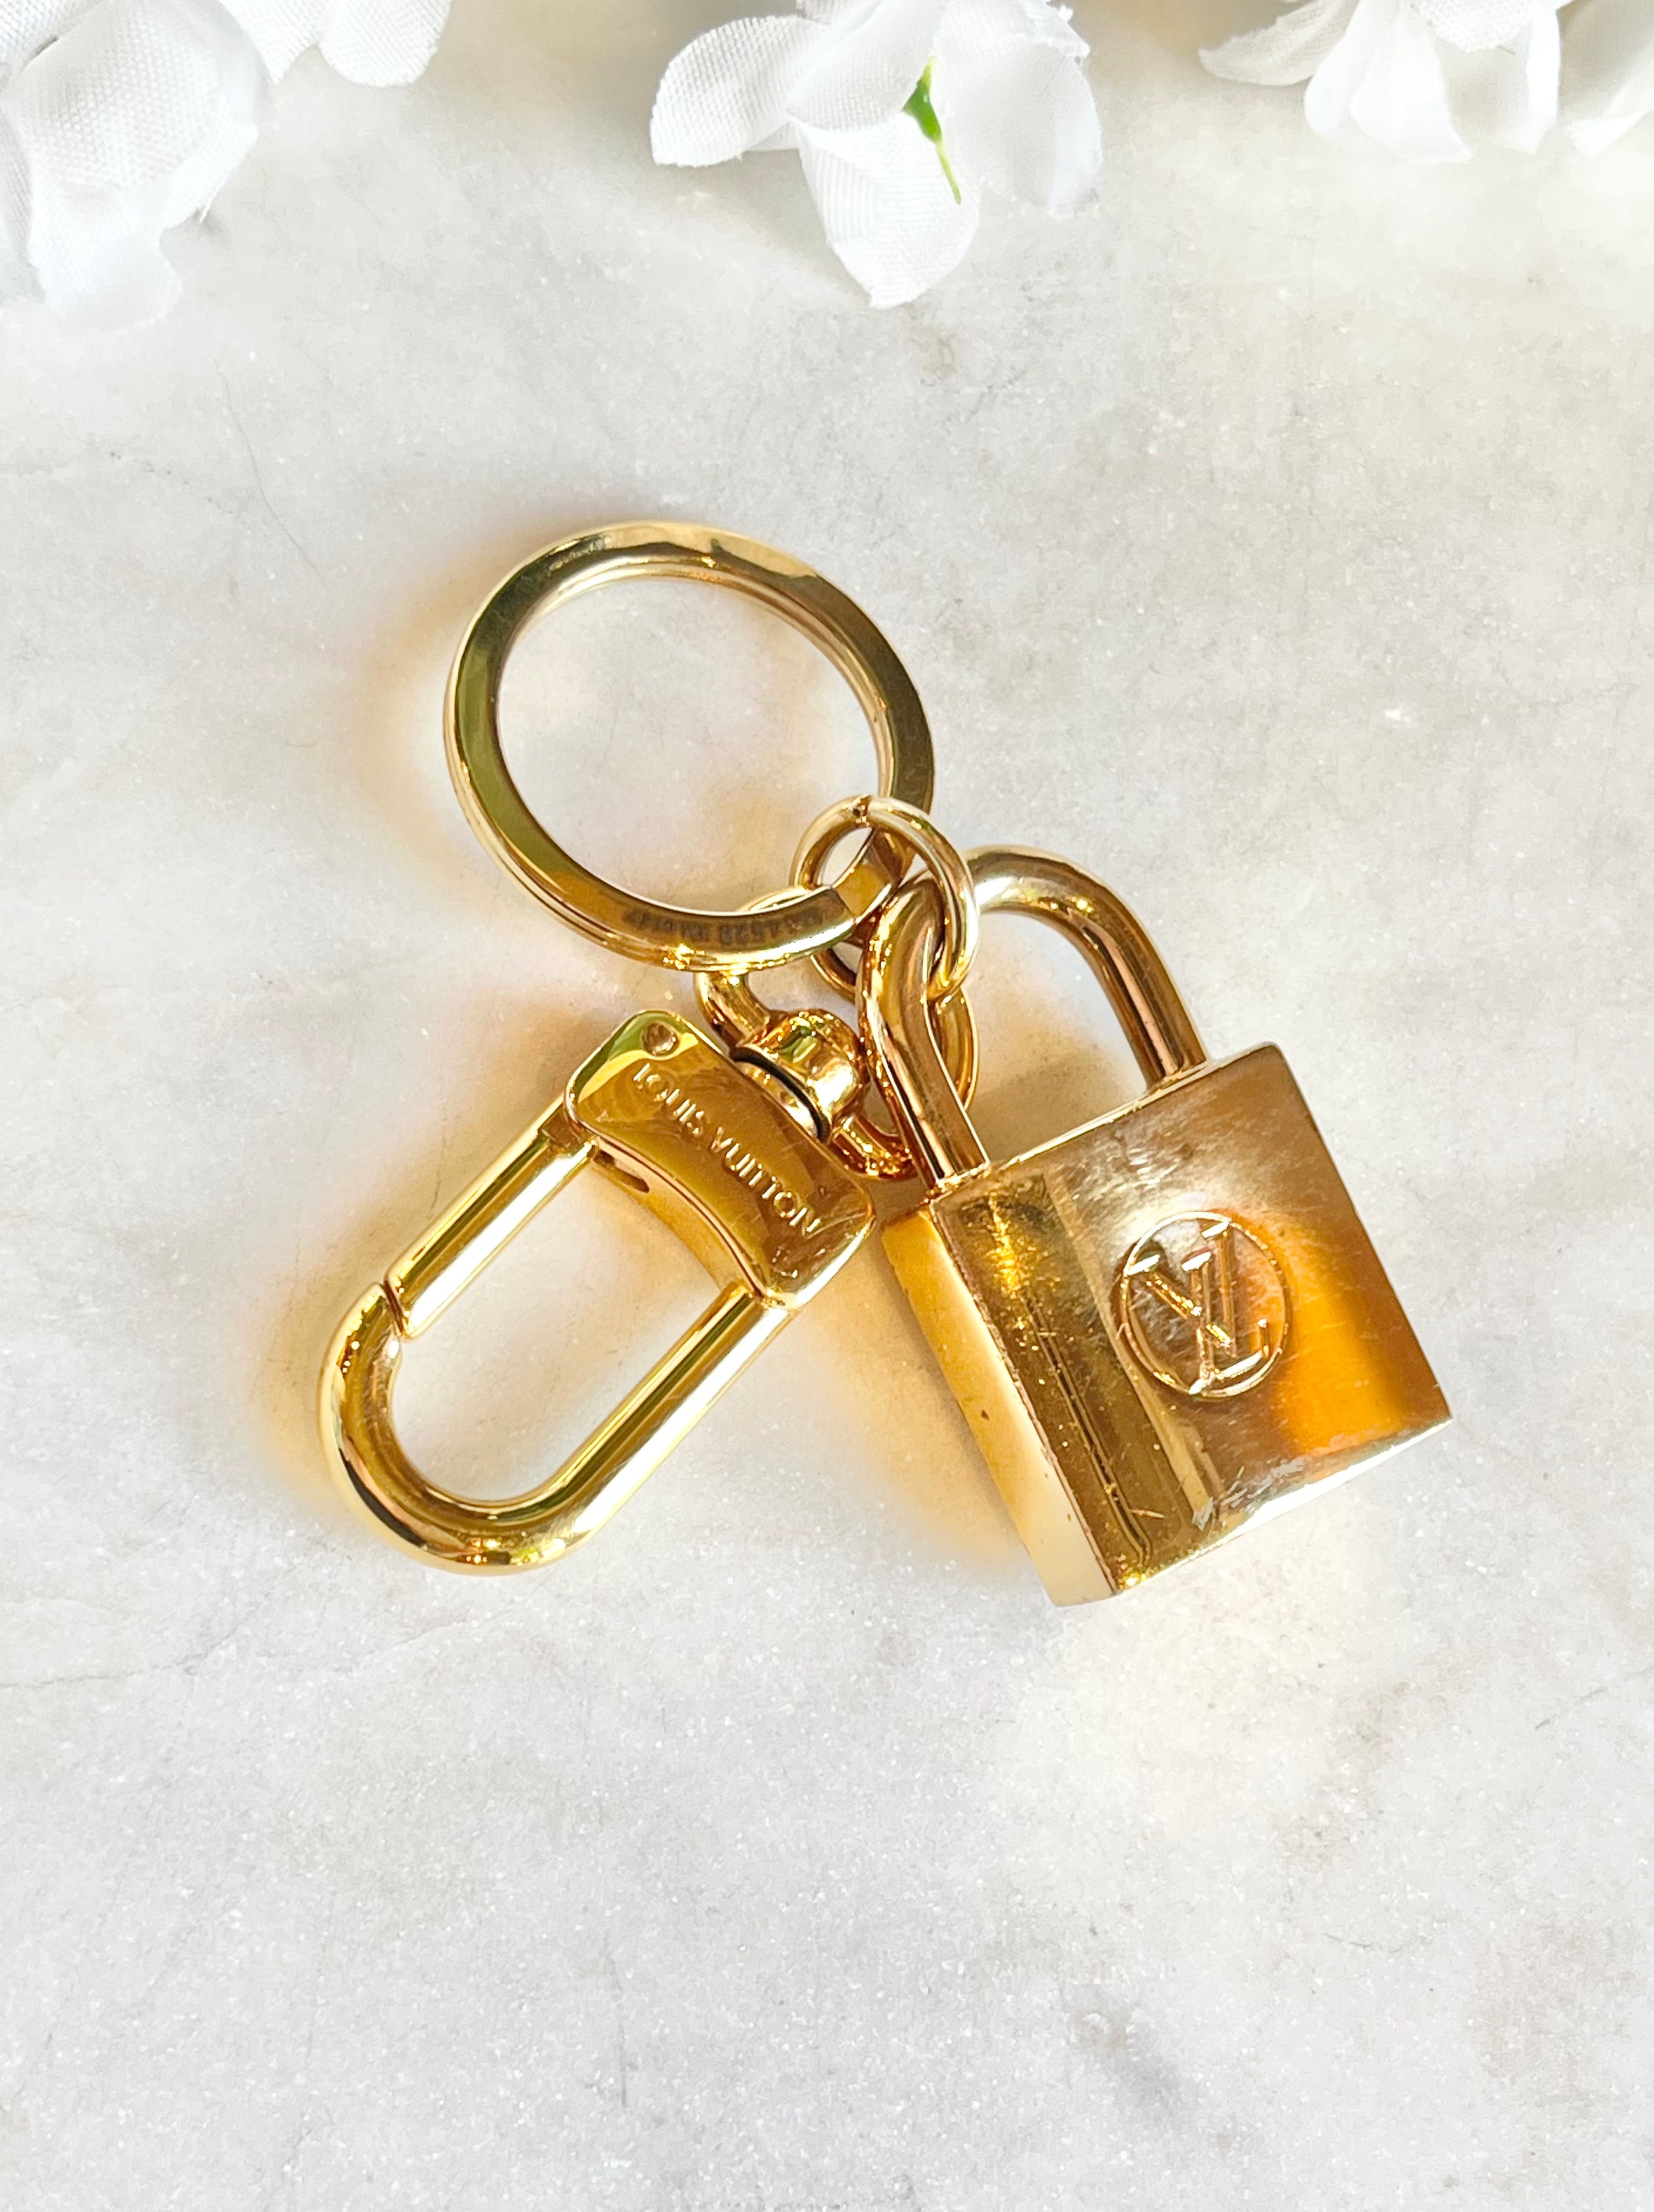 Louis Vuitton Pochette Extender Key Ring - Gold Keychains